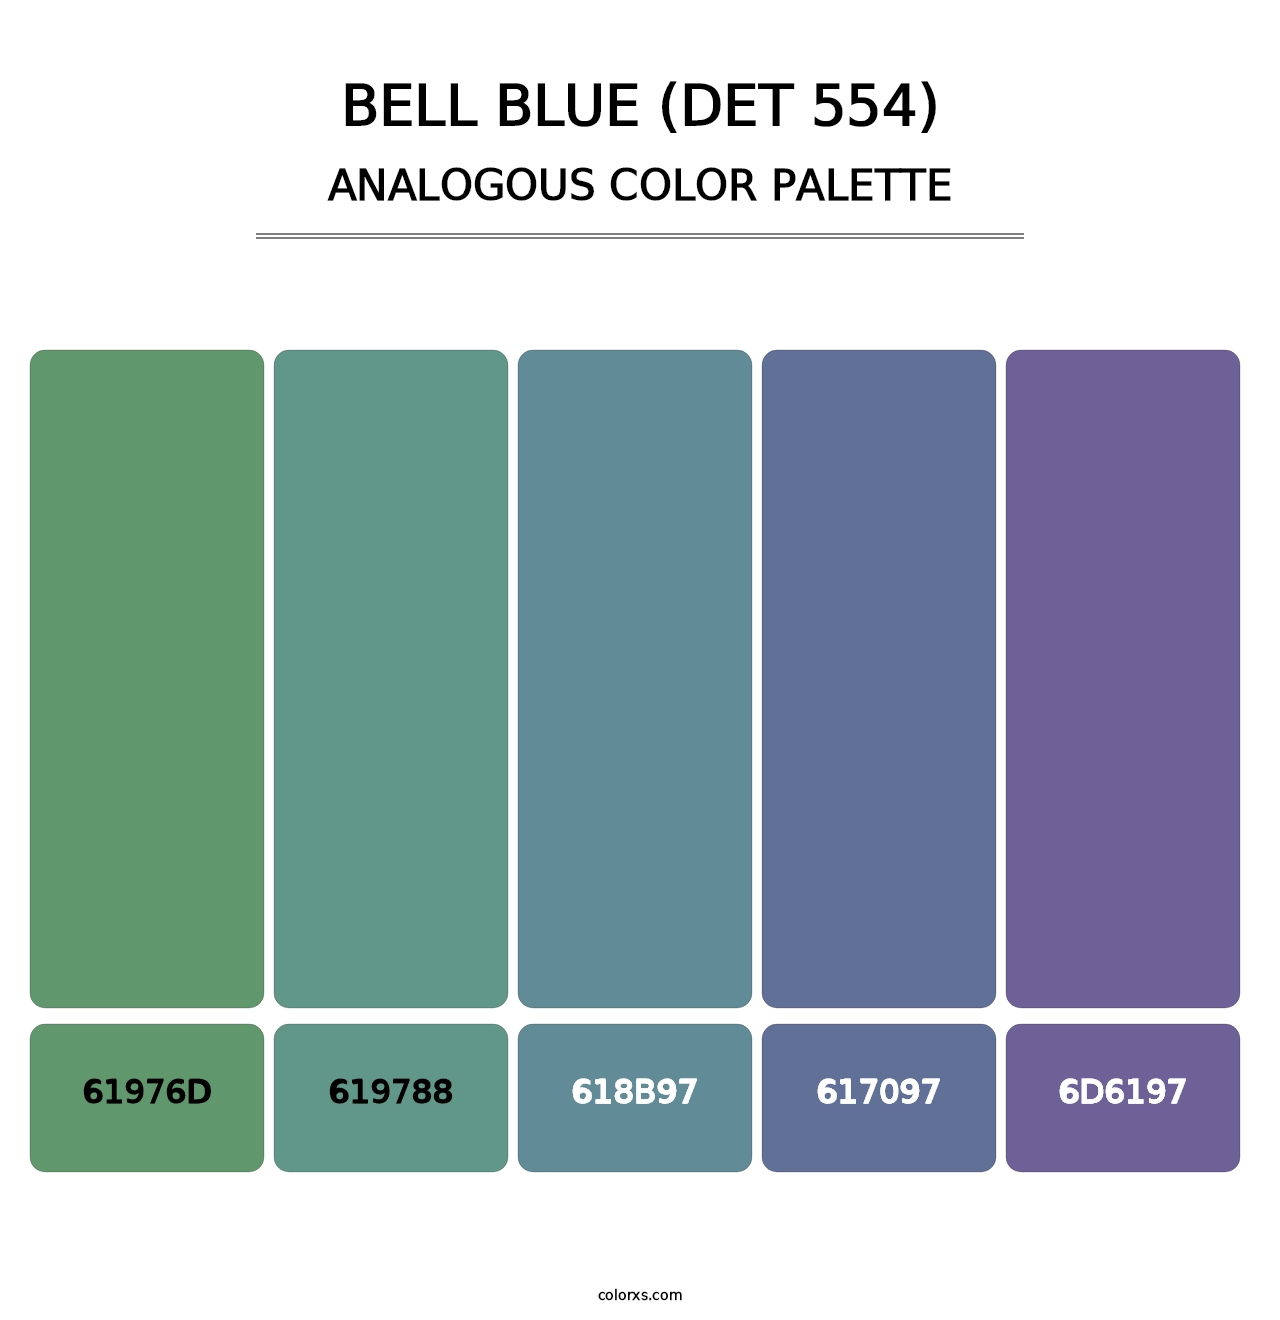 Bell Blue (DET 554) - Analogous Color Palette